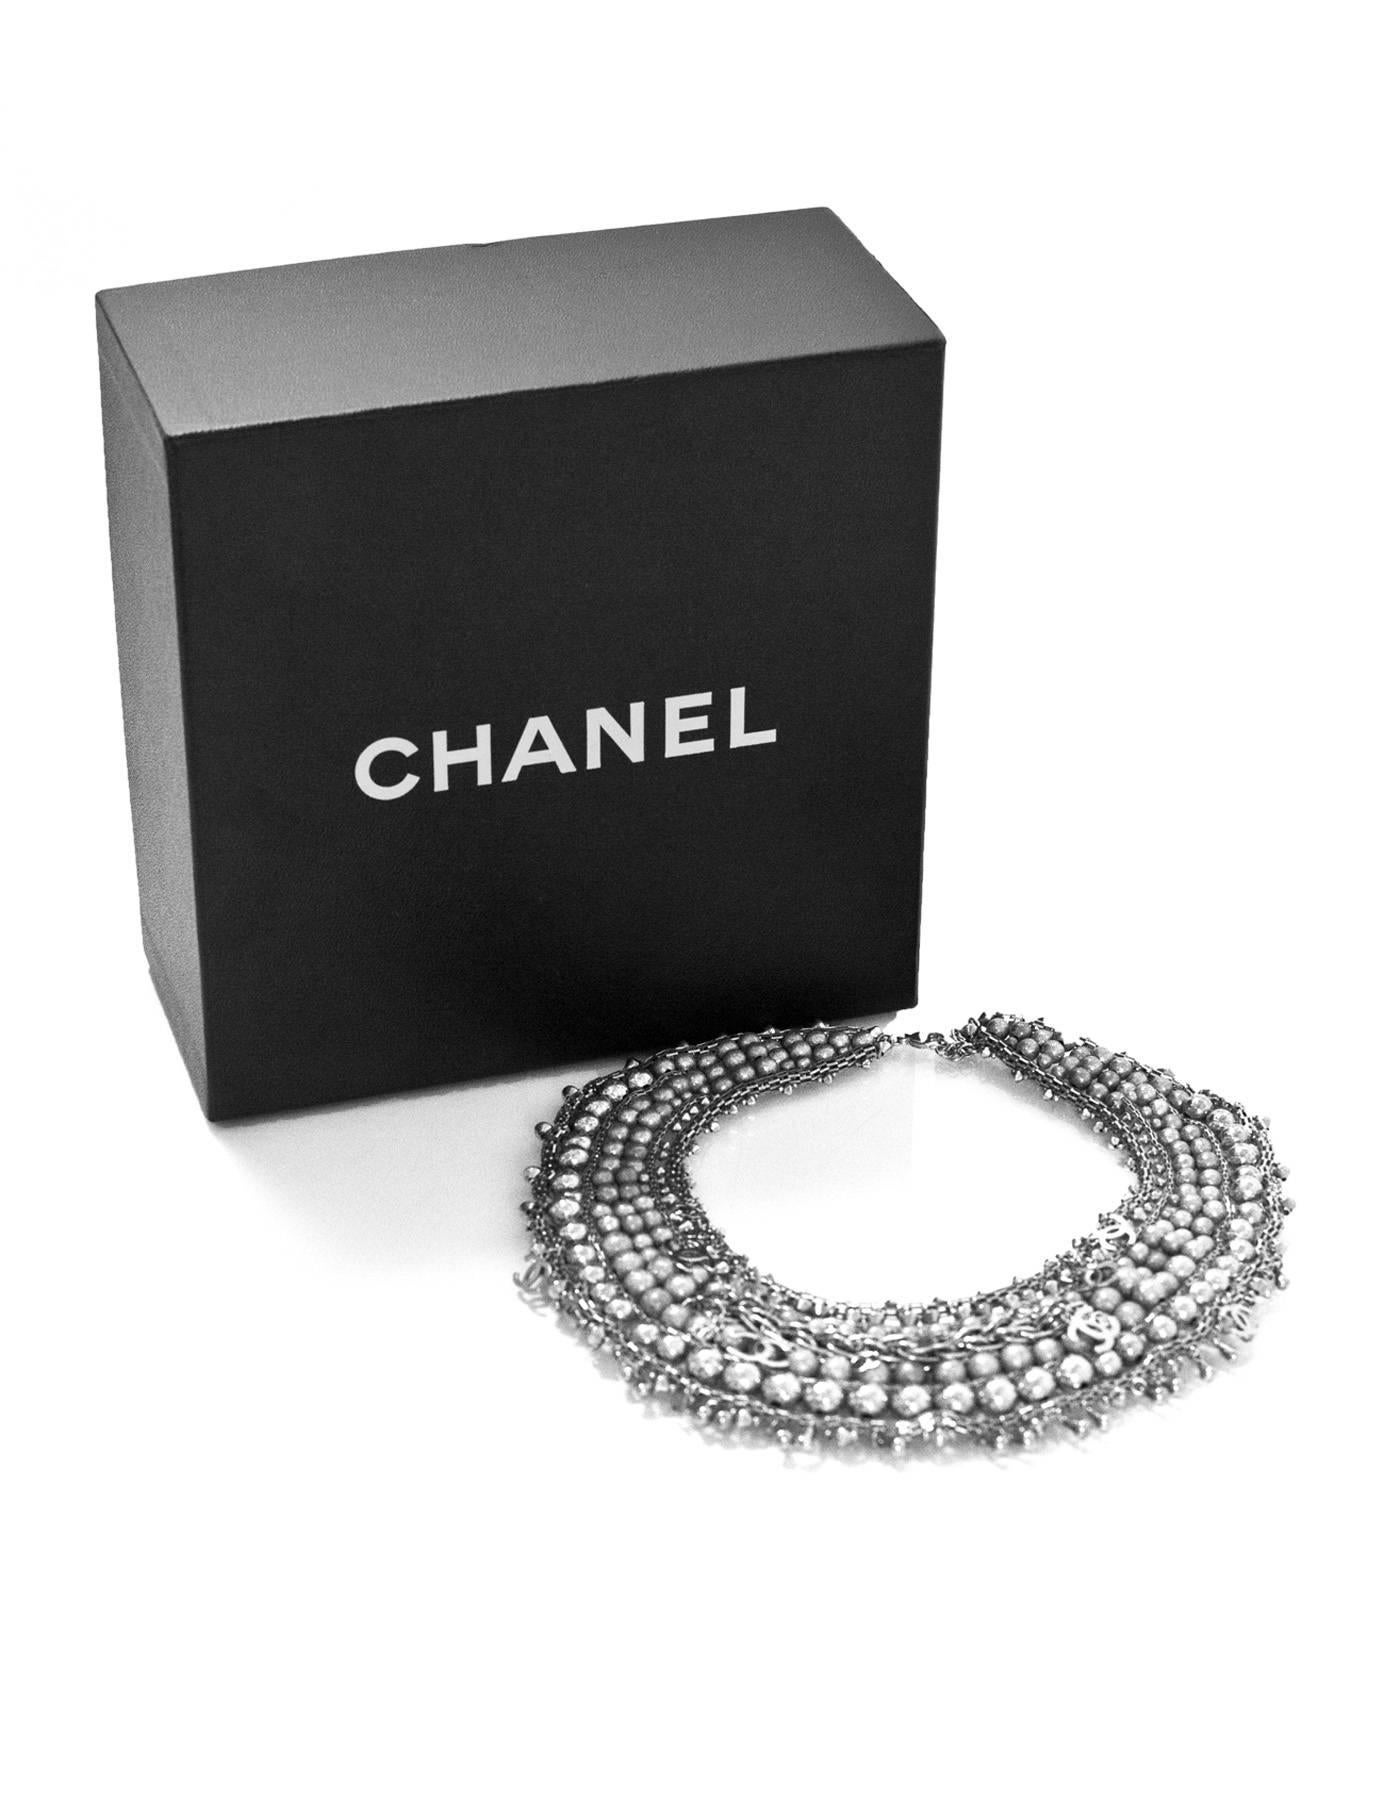 Chanel 2012 Paris-Bombay Silver Beaded Bib Necklace rt. $8, 500 3